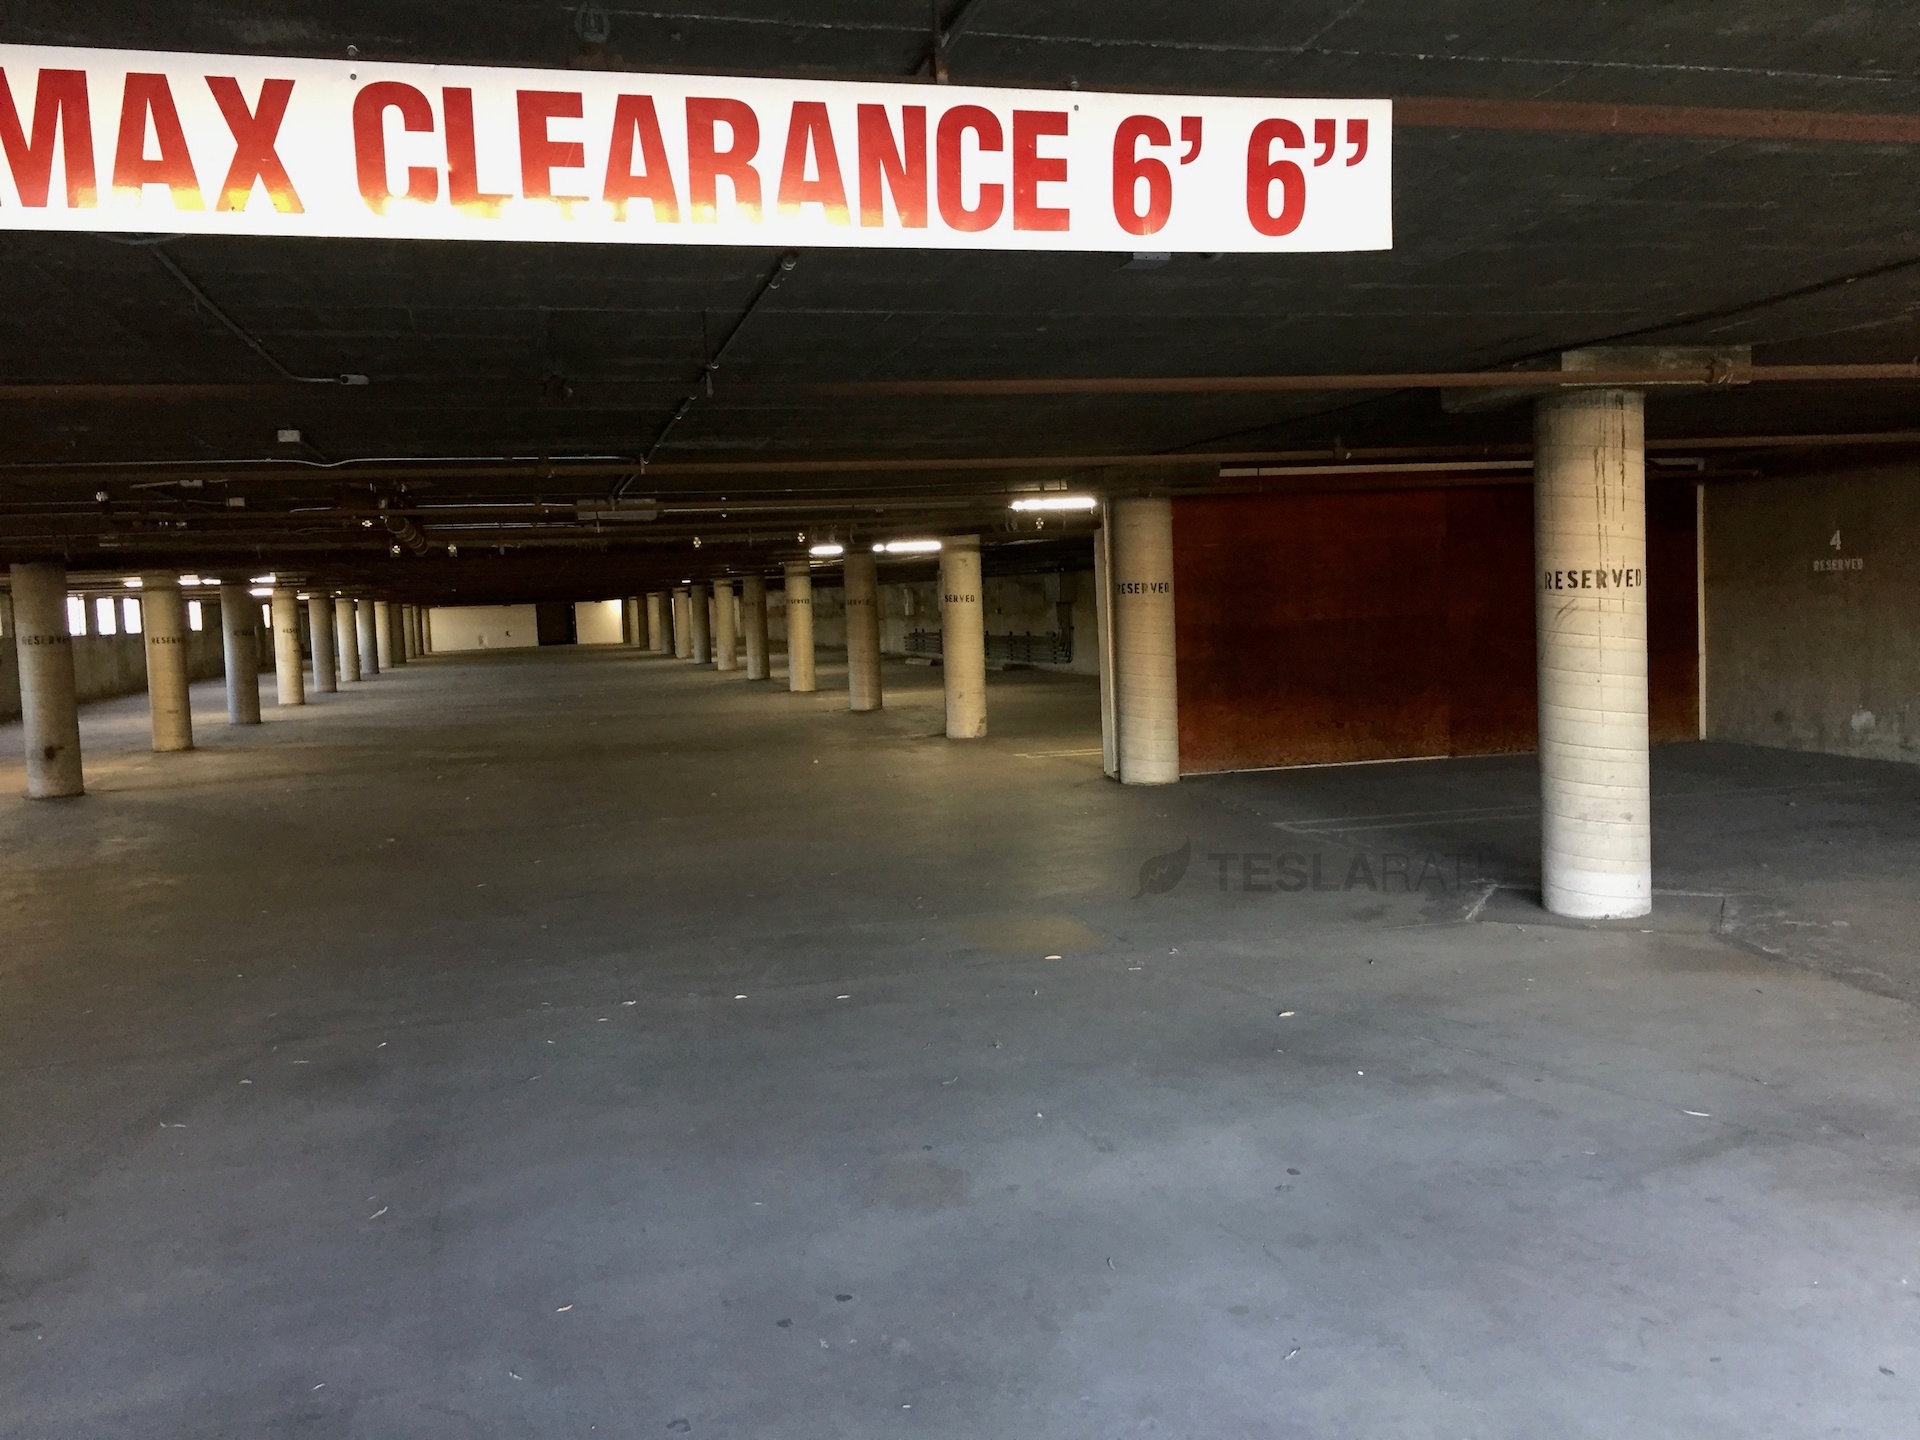 Subterranean parking for 58 vehicles.